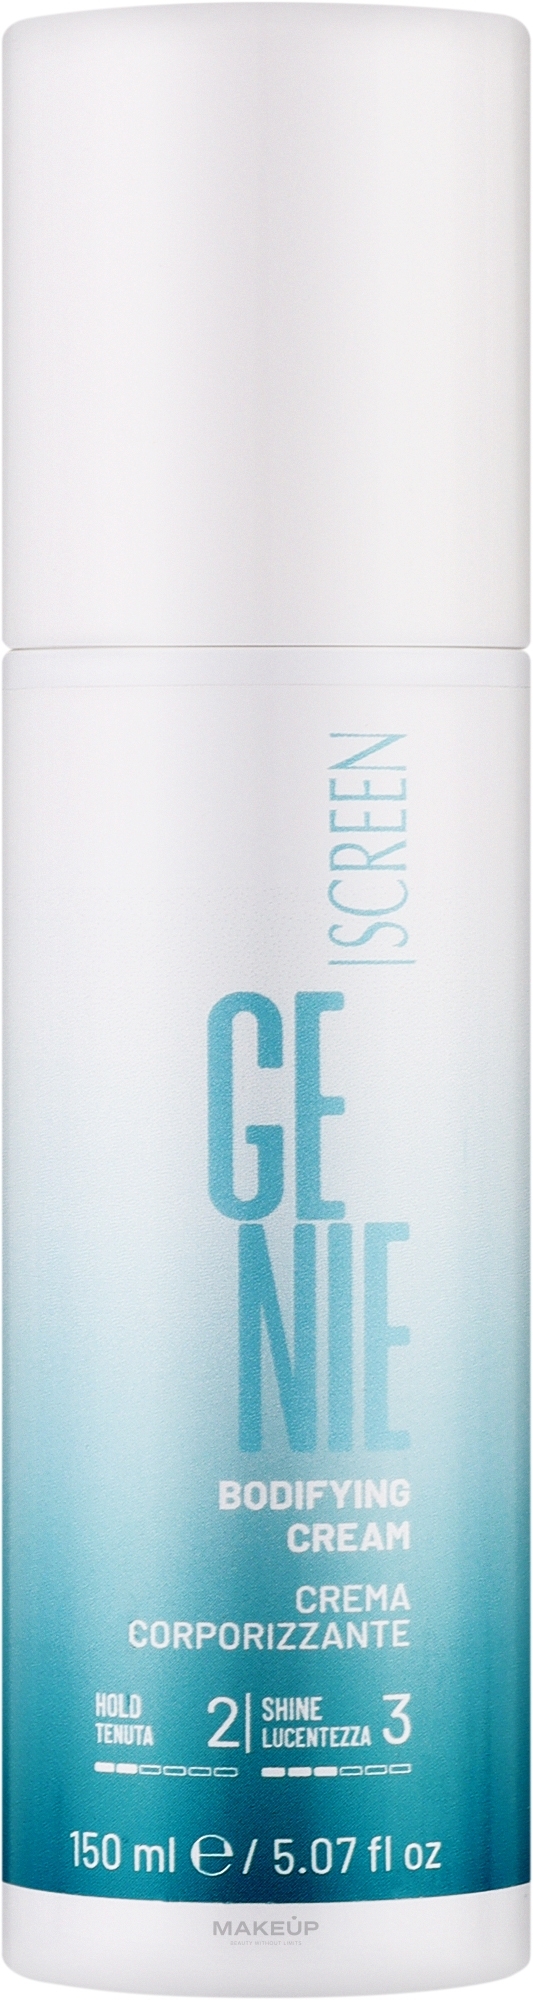 Крем для укладки непослушных волос - Screen Genie Bodifying Cream — фото 150ml